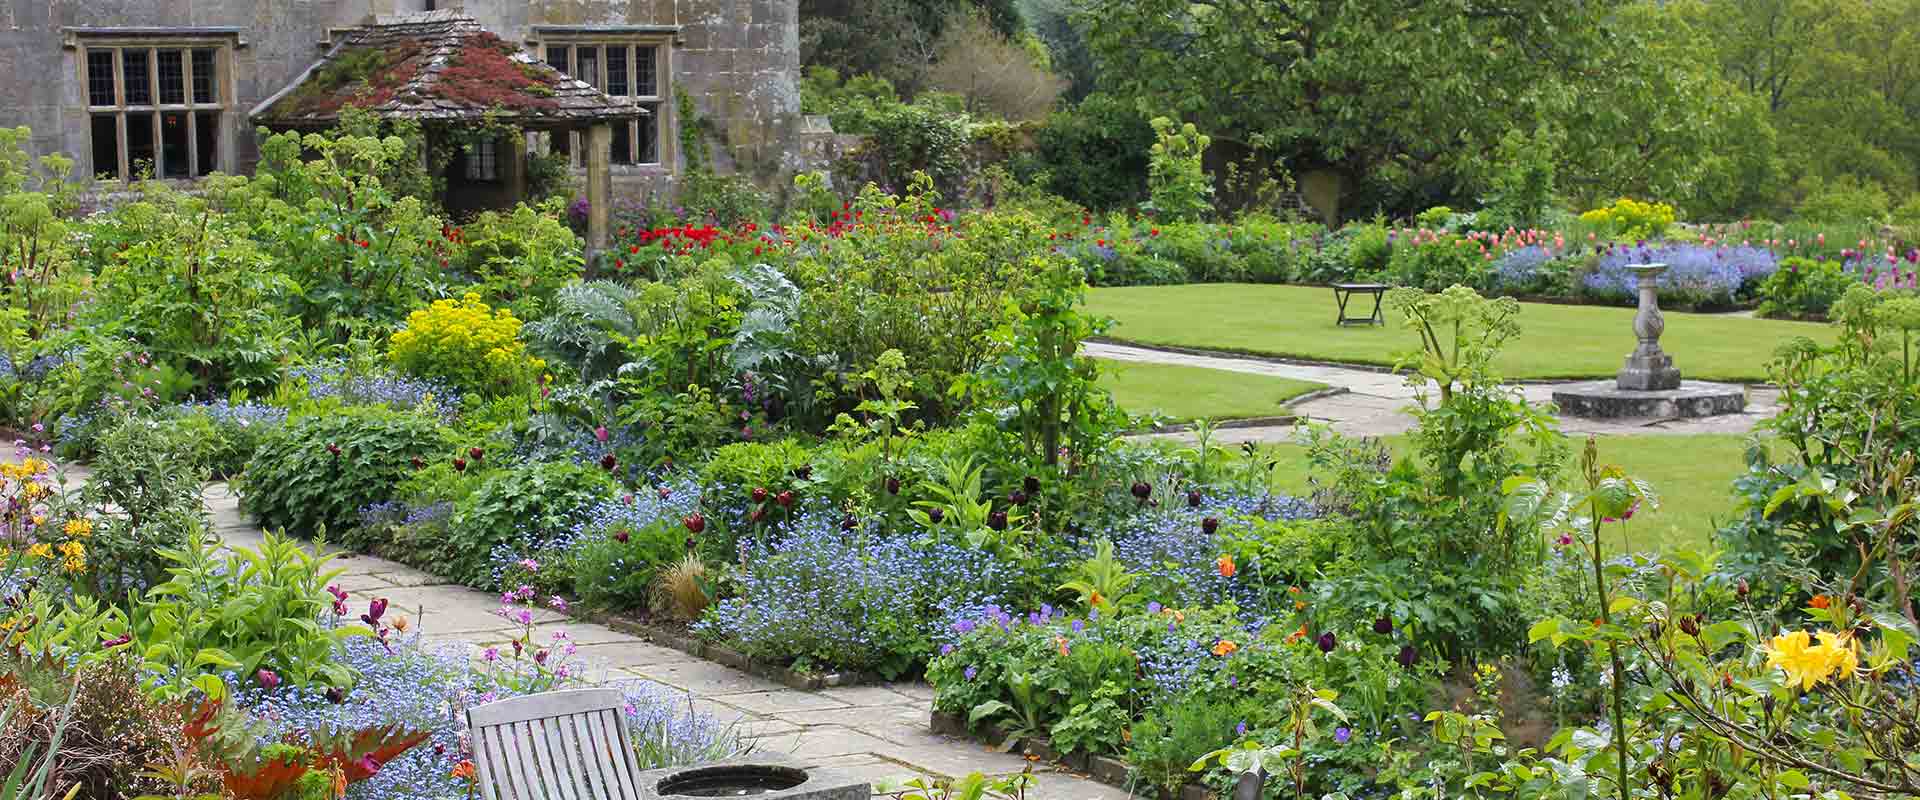 hampton court flower show & gardens of sussex - tours - itravel